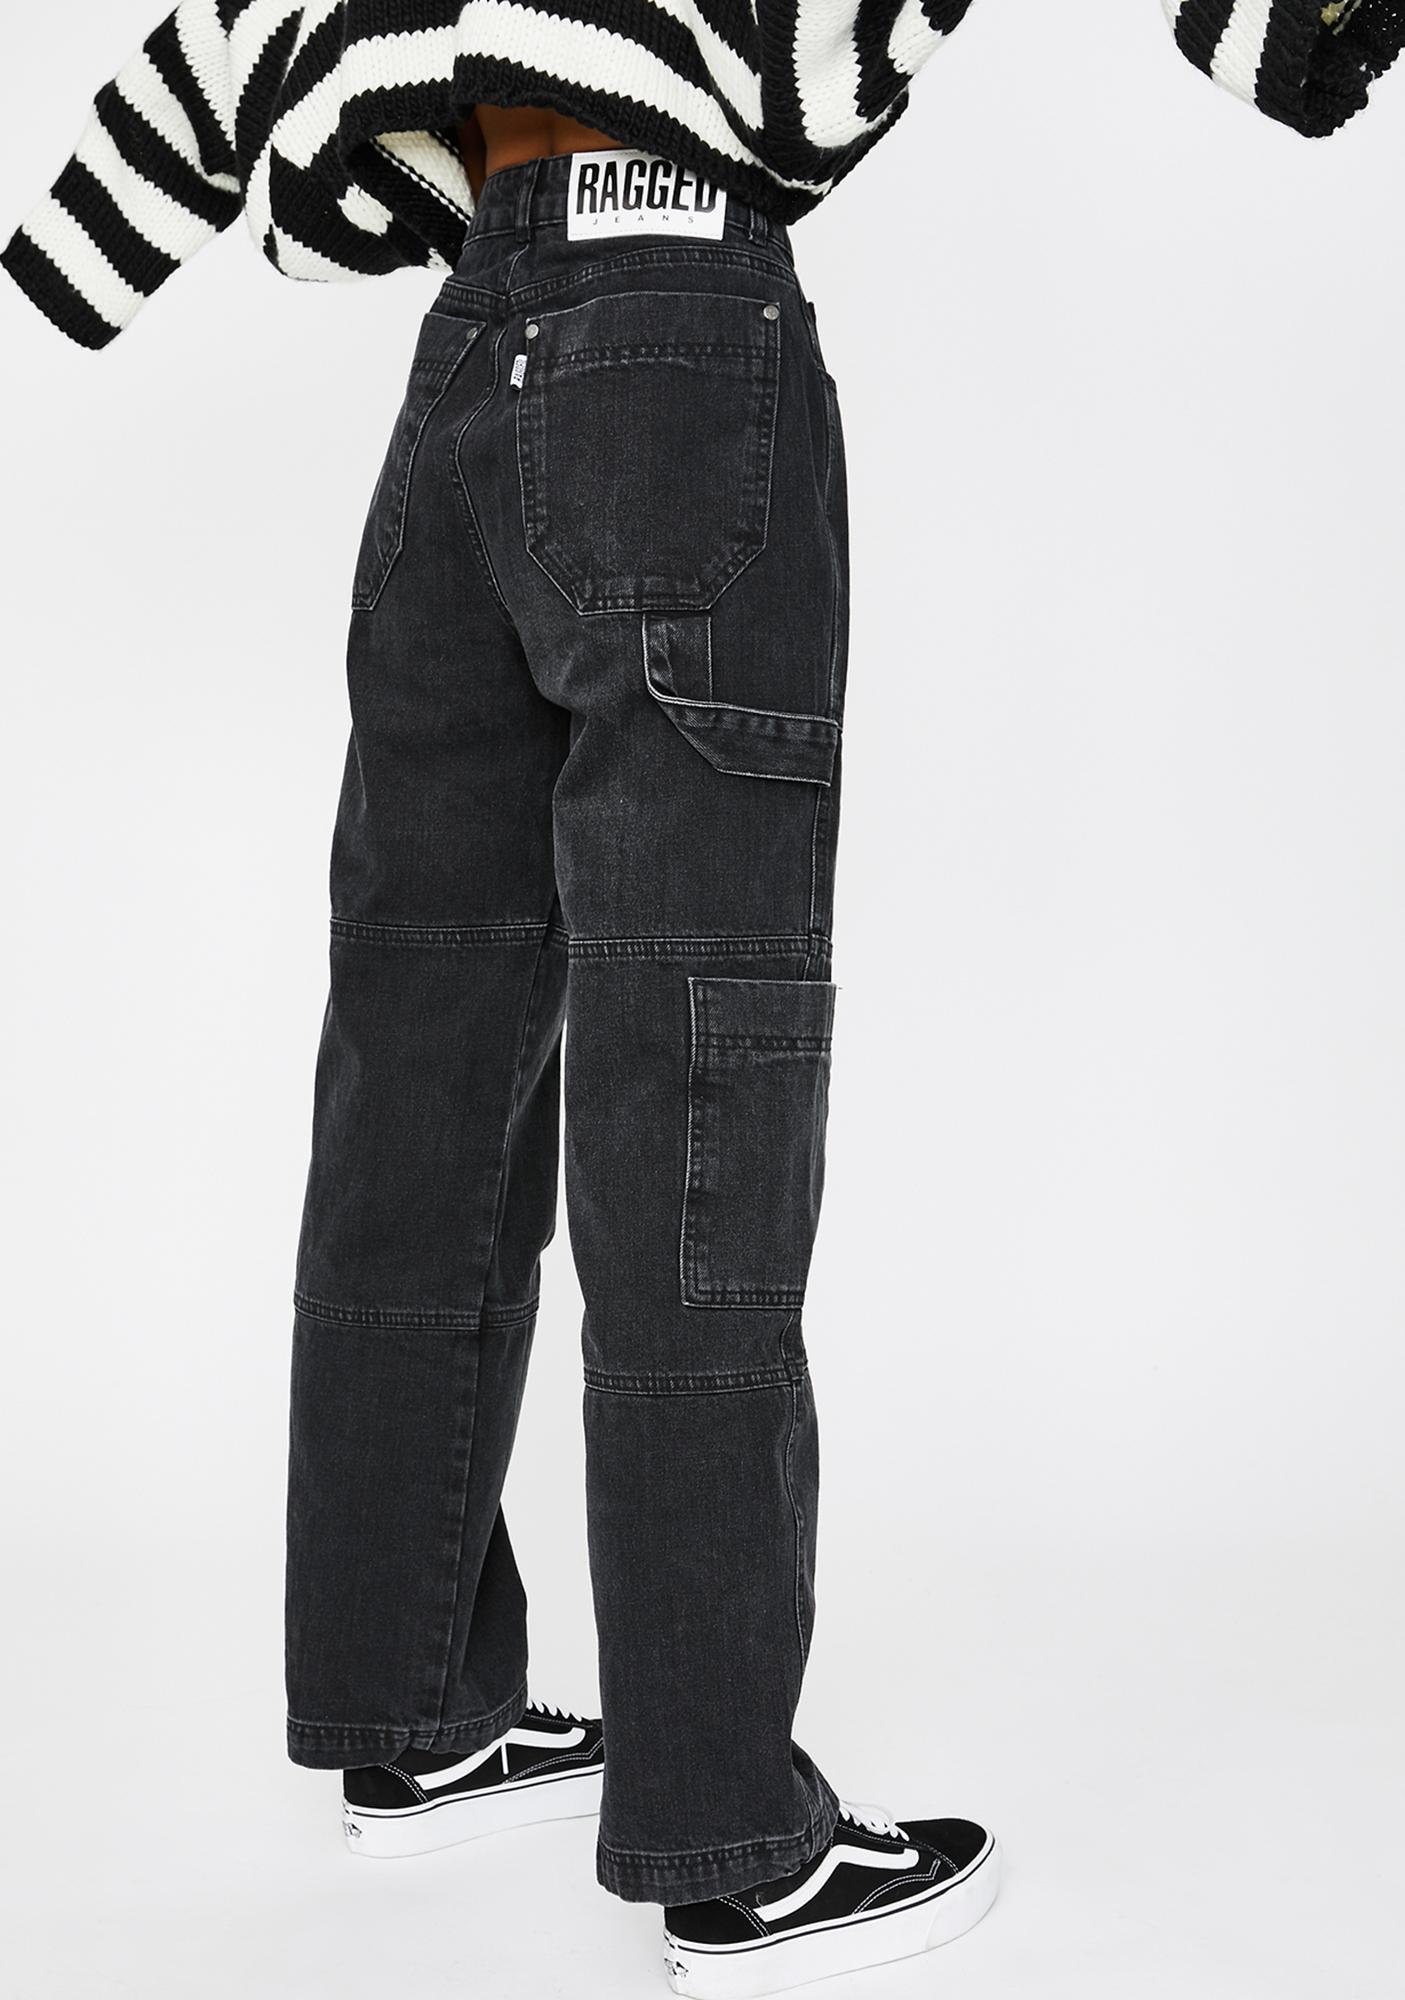 black ragged jeans